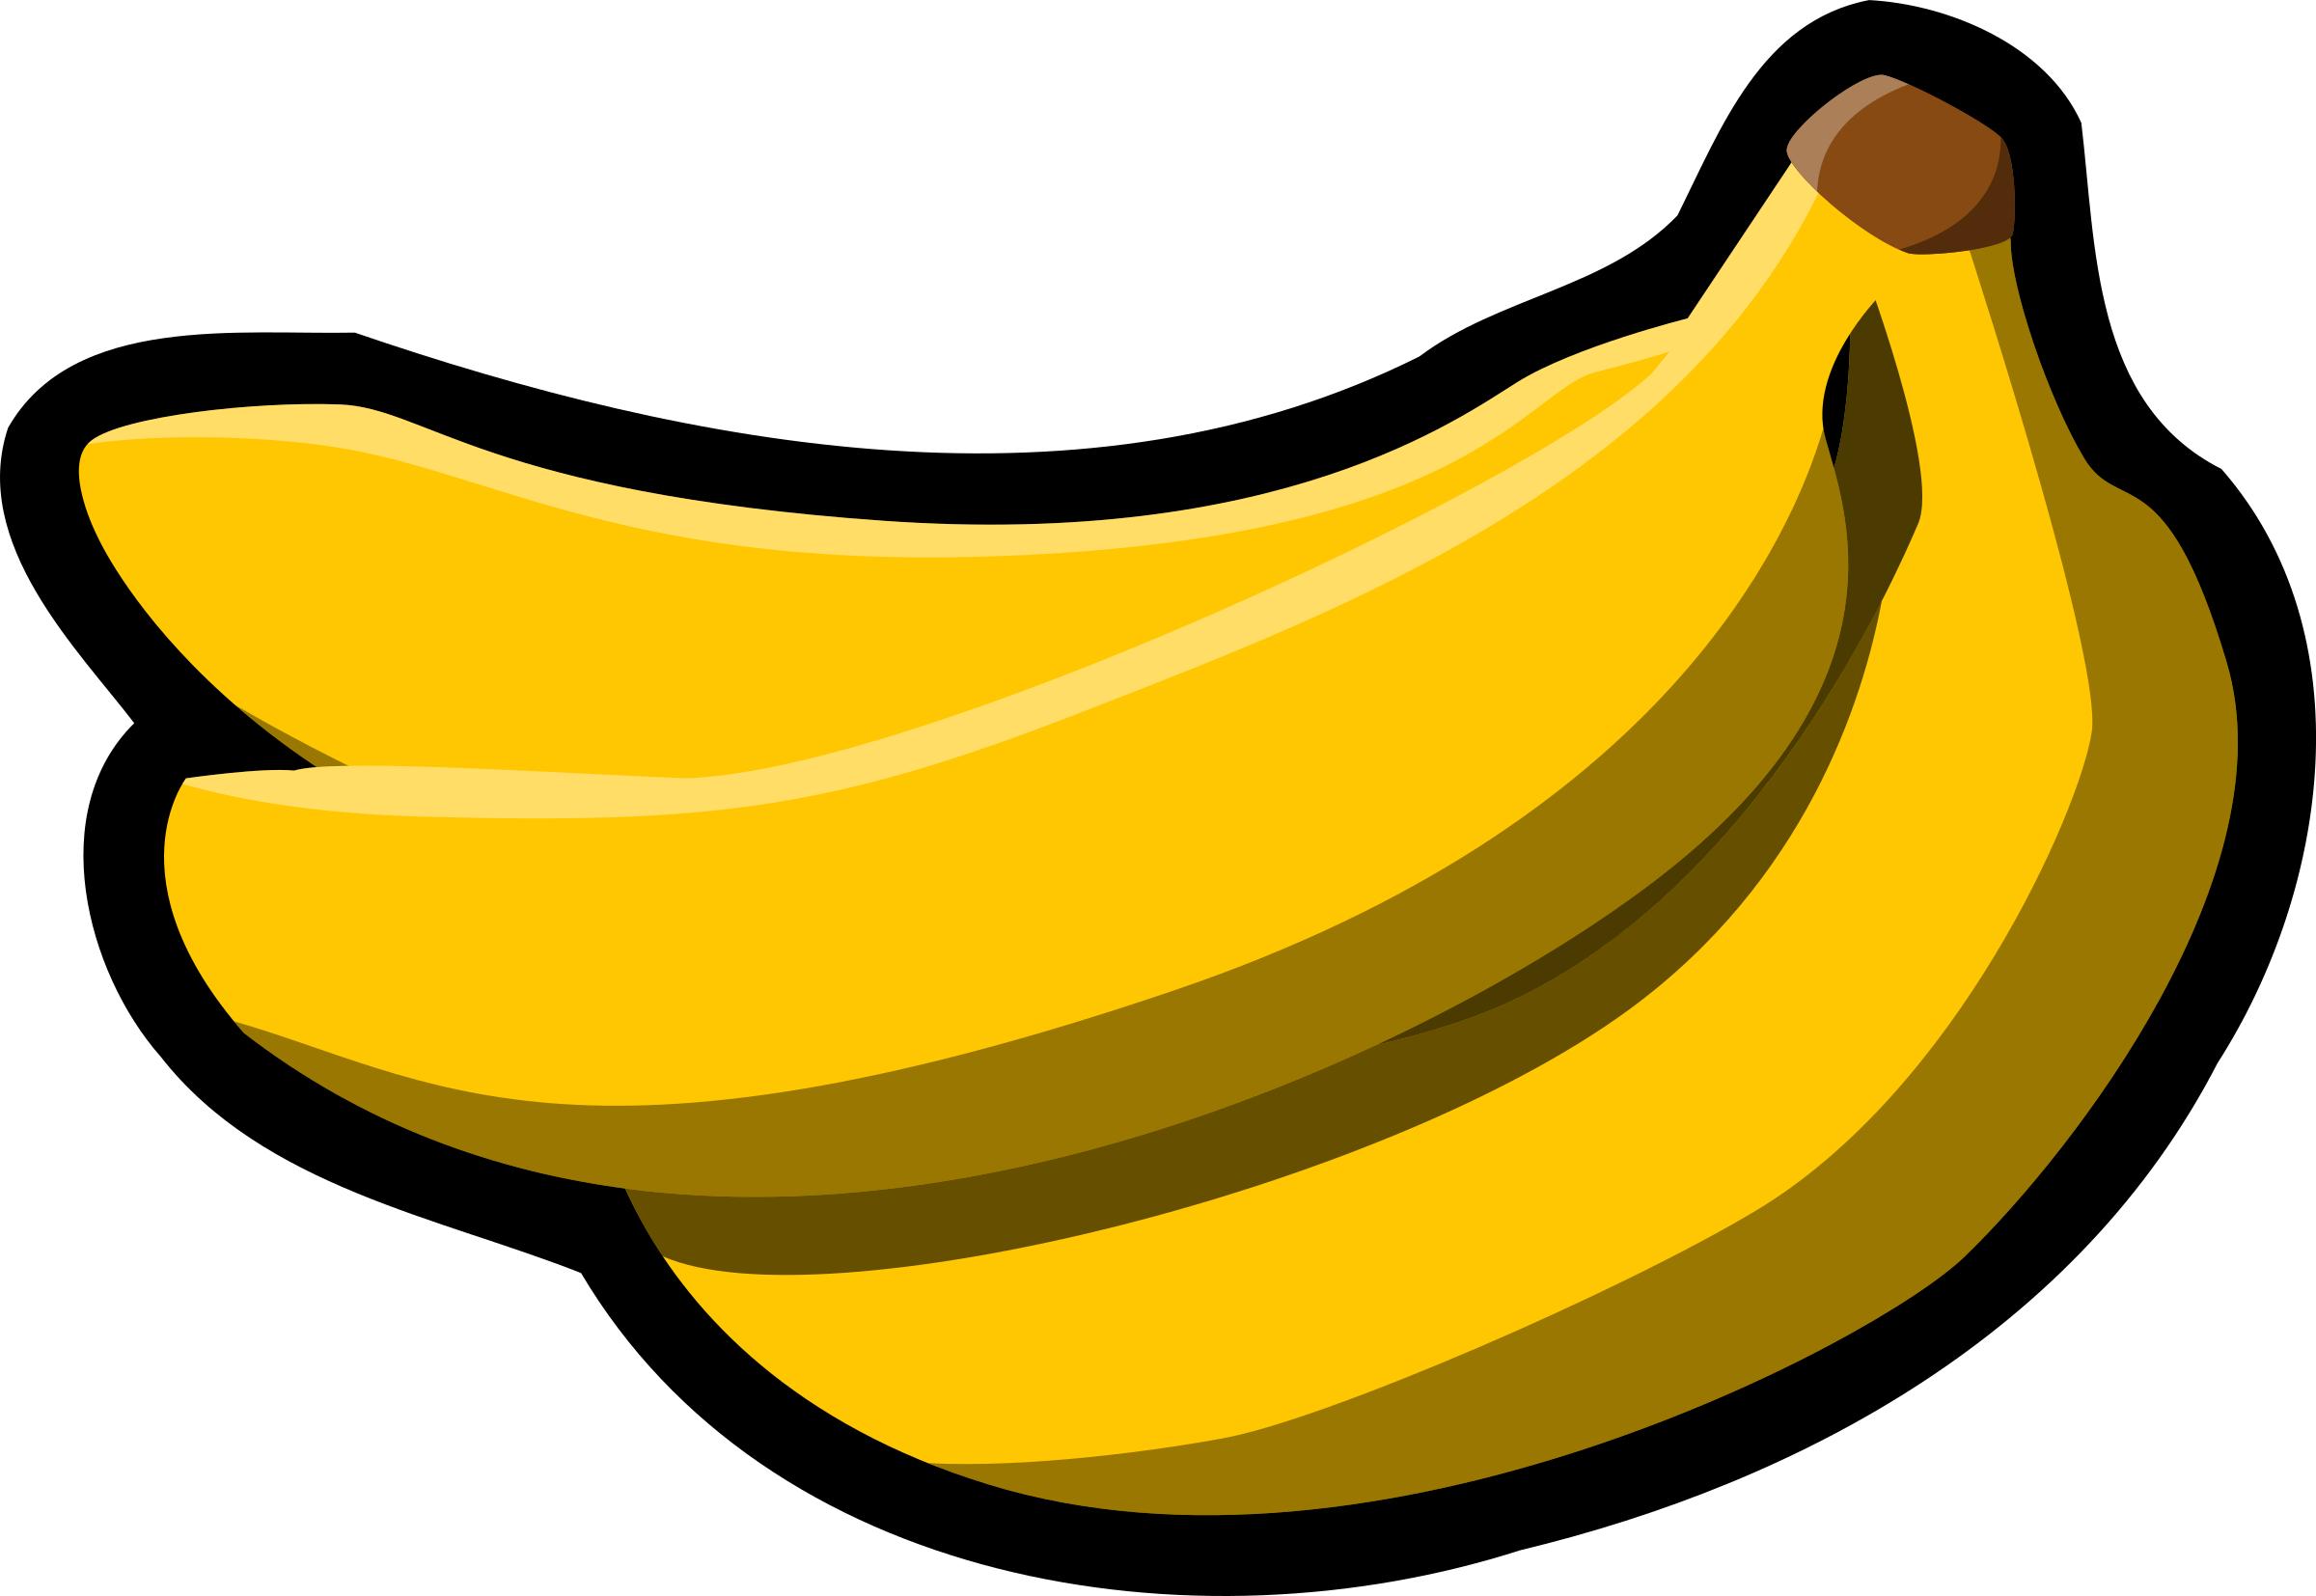 Bananas icon PNG icons